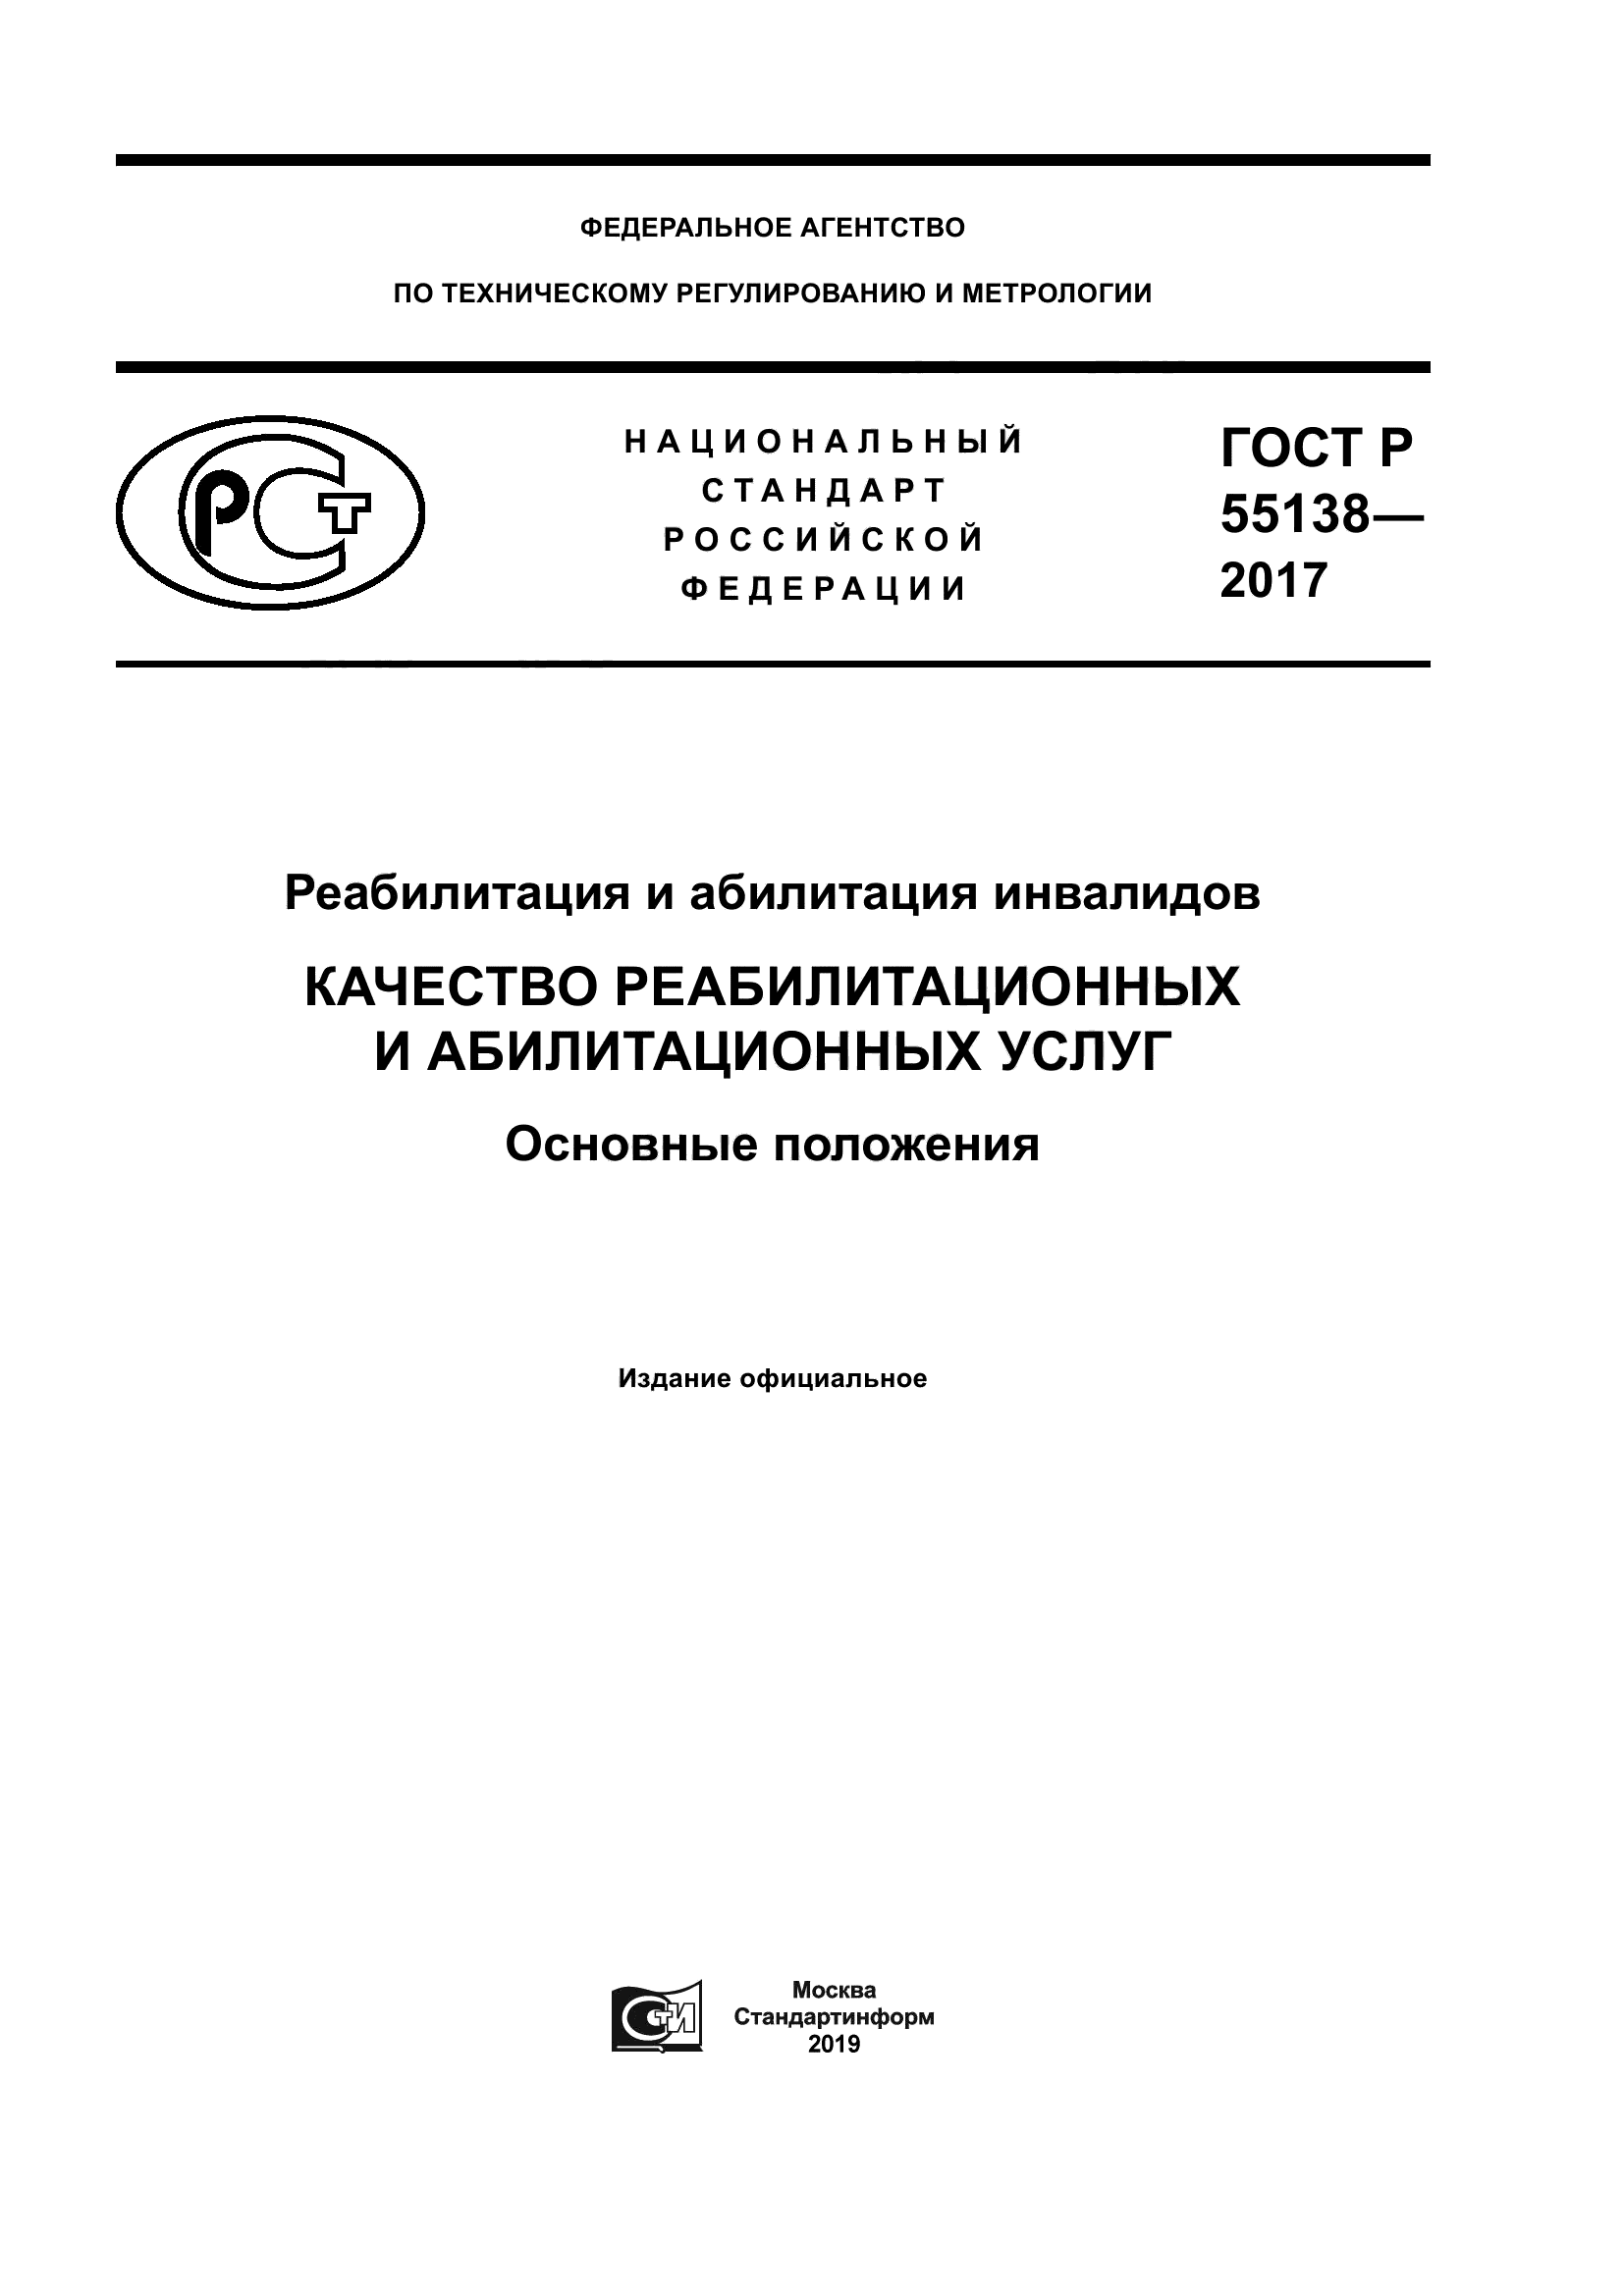 ГОСТ Р 55138-2017